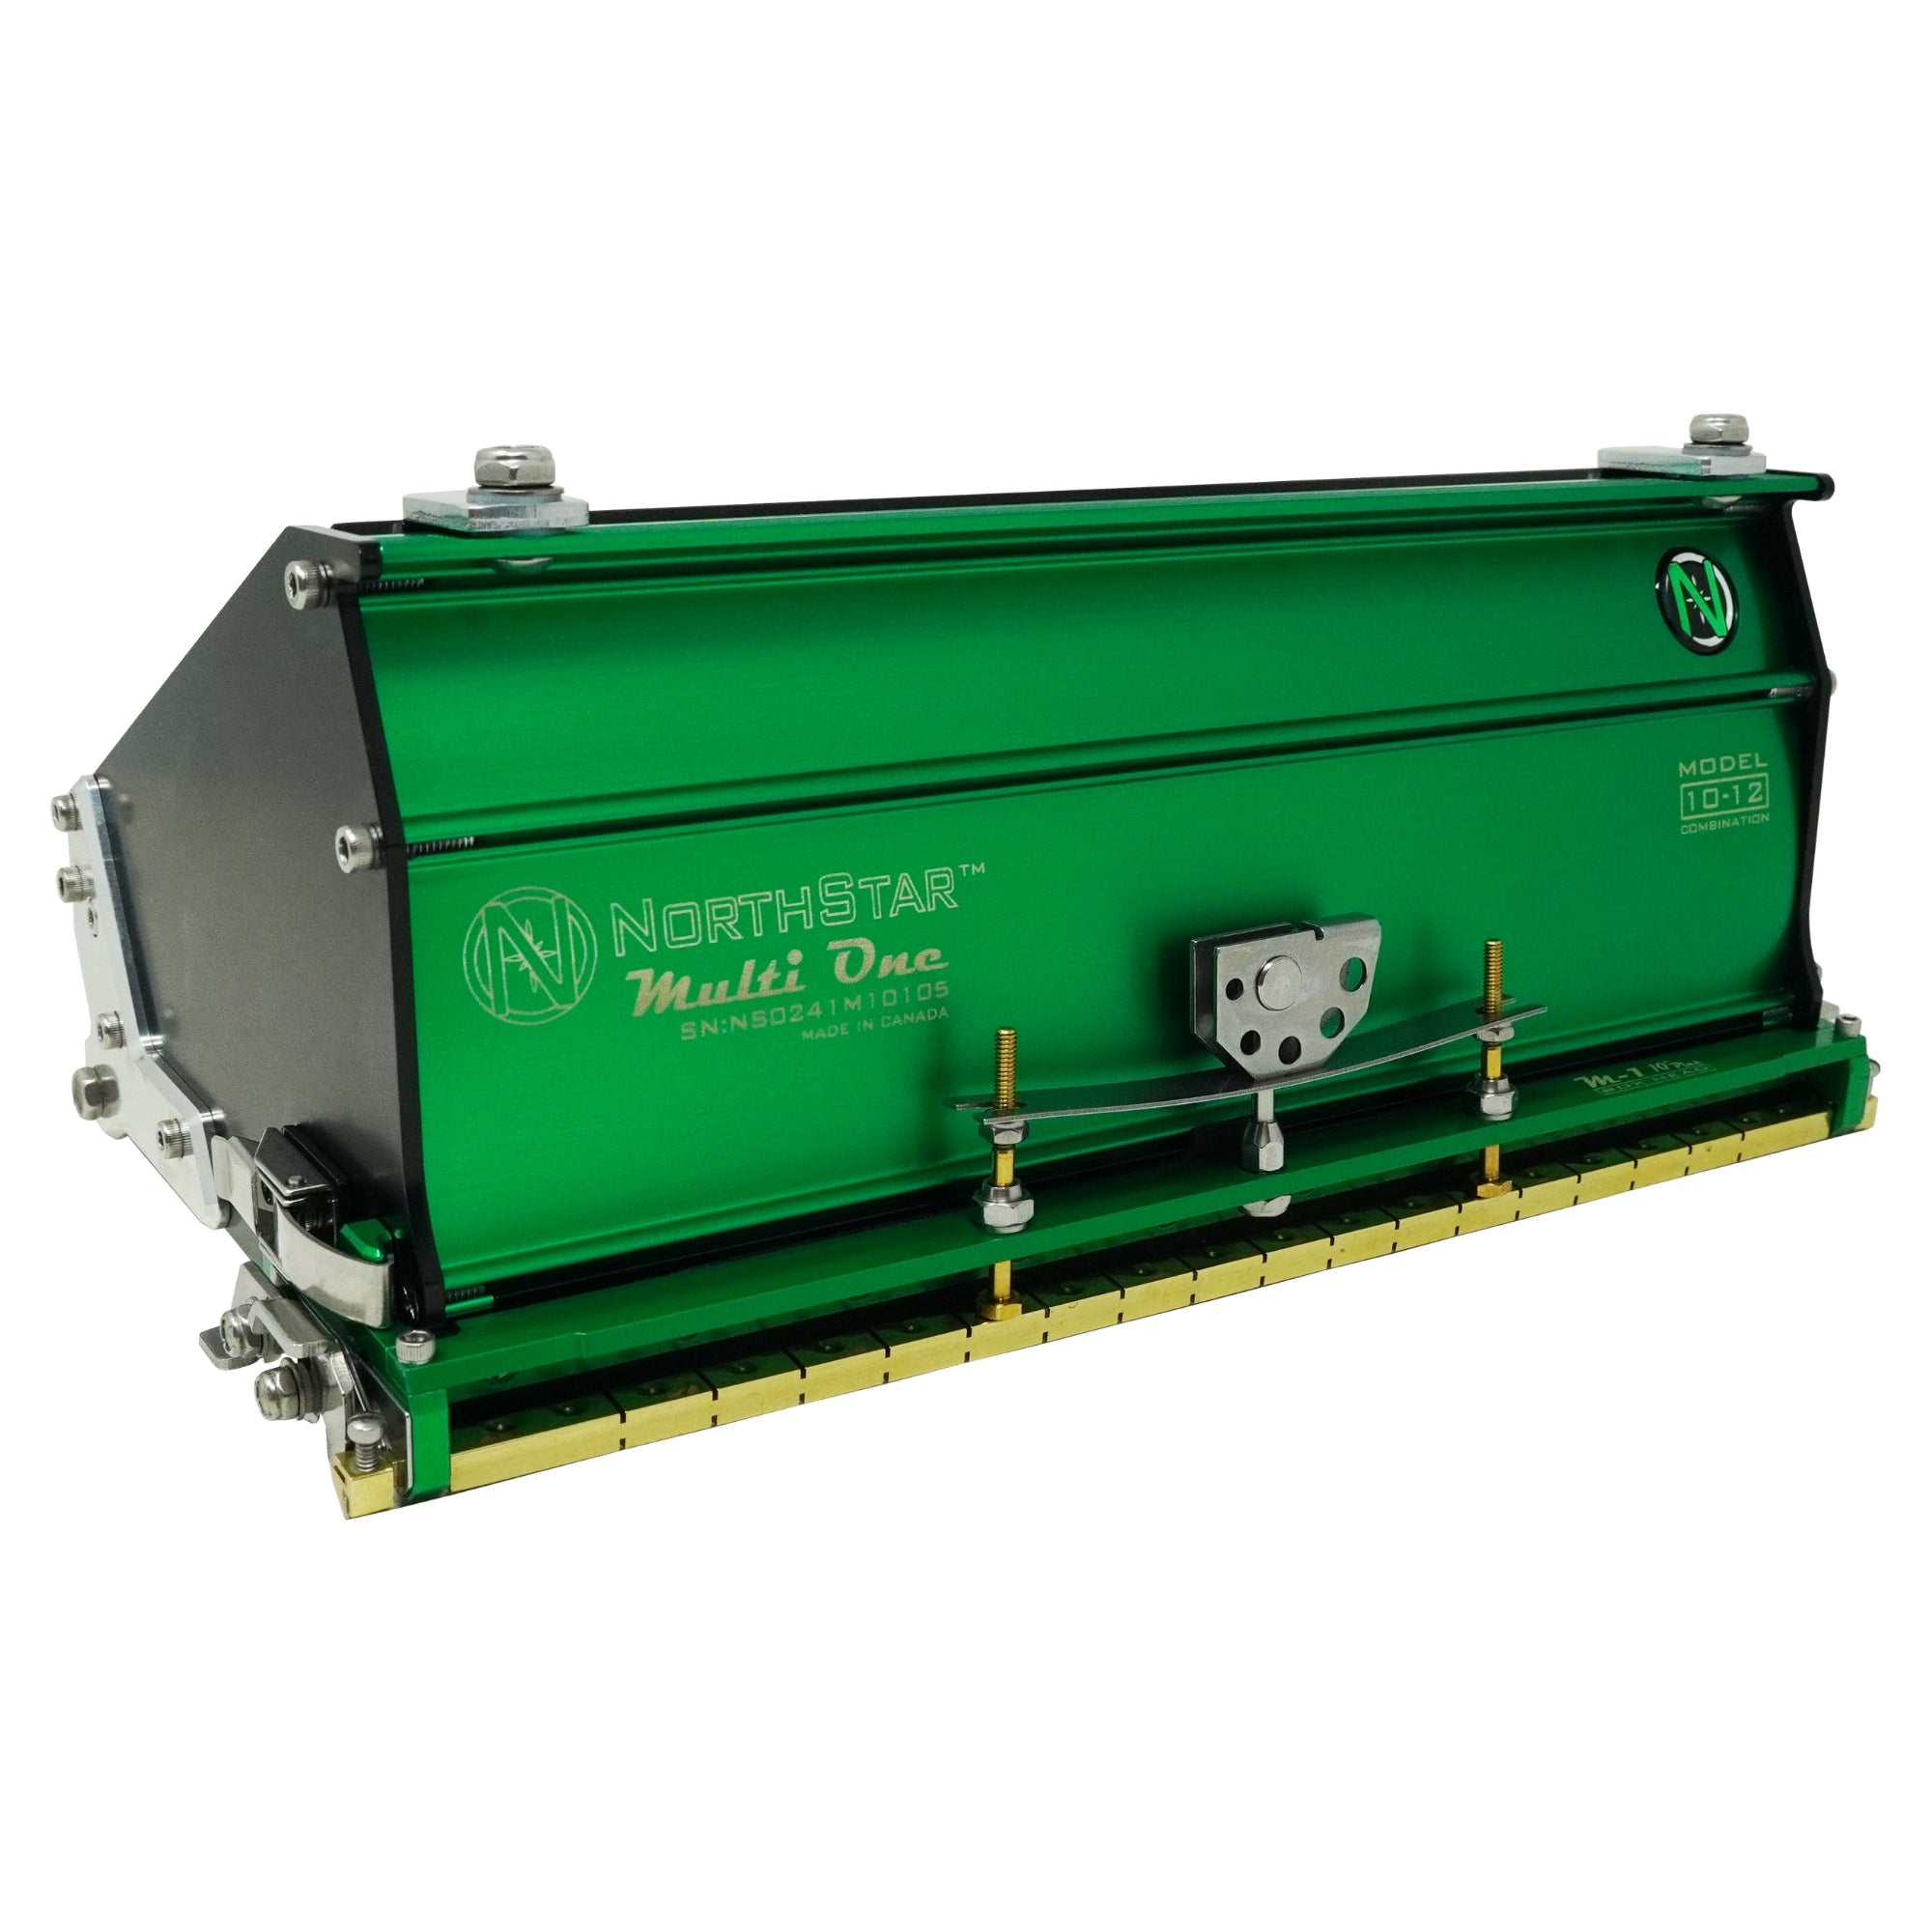 NorthStar™ In Trac Multi-One High-Top Flat Box con guías de talón